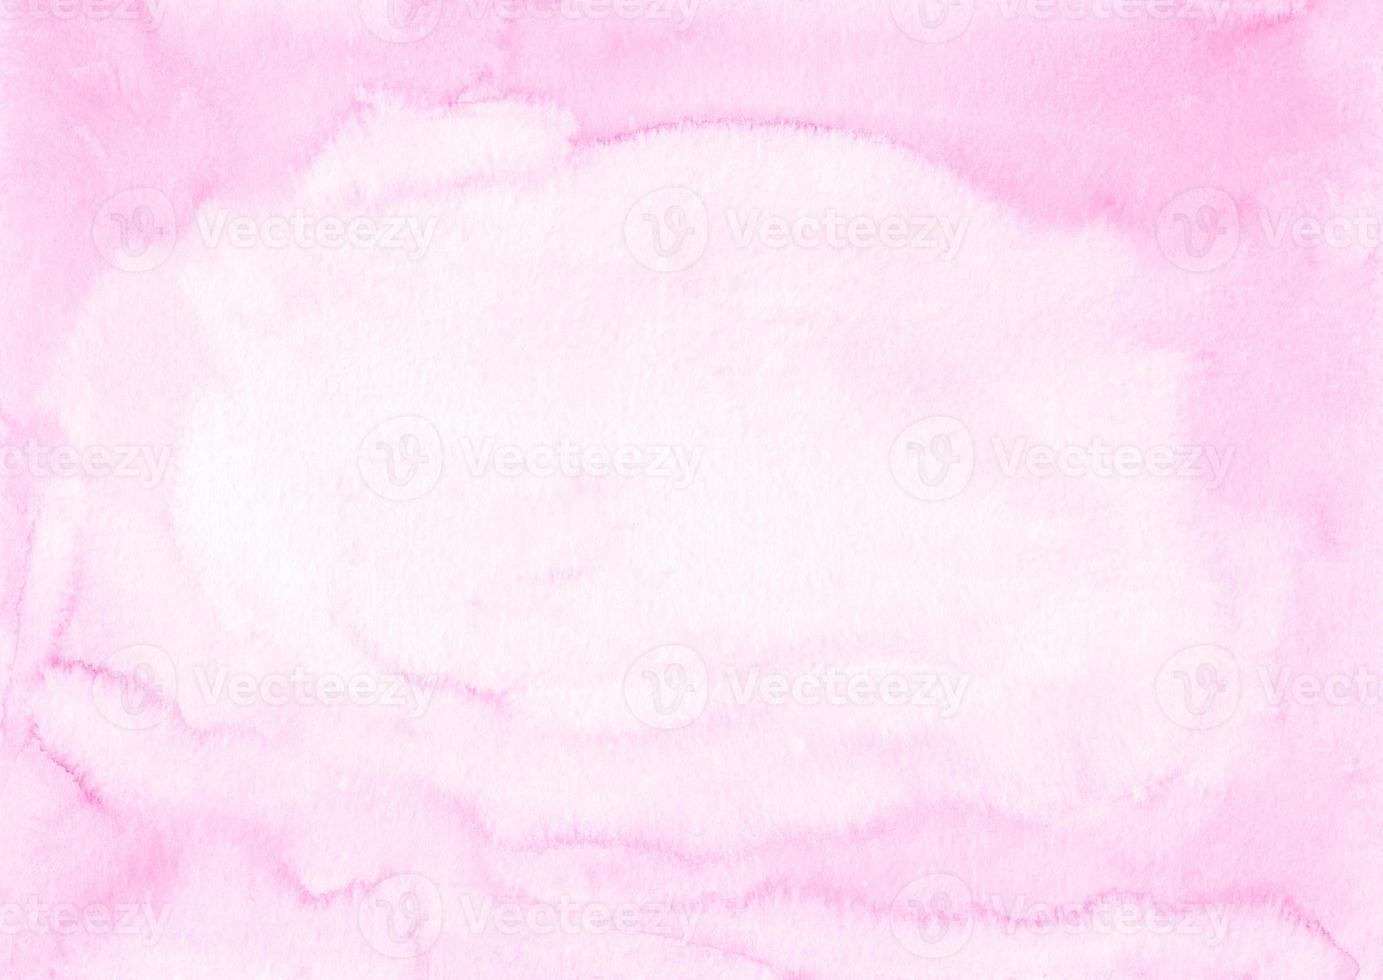 fondo rosa pastel acuarela con espacio de copia. Manchas de color rosa  claro sobre papel, textura pintada a mano. 12313421 Foto de stock en  Vecteezy